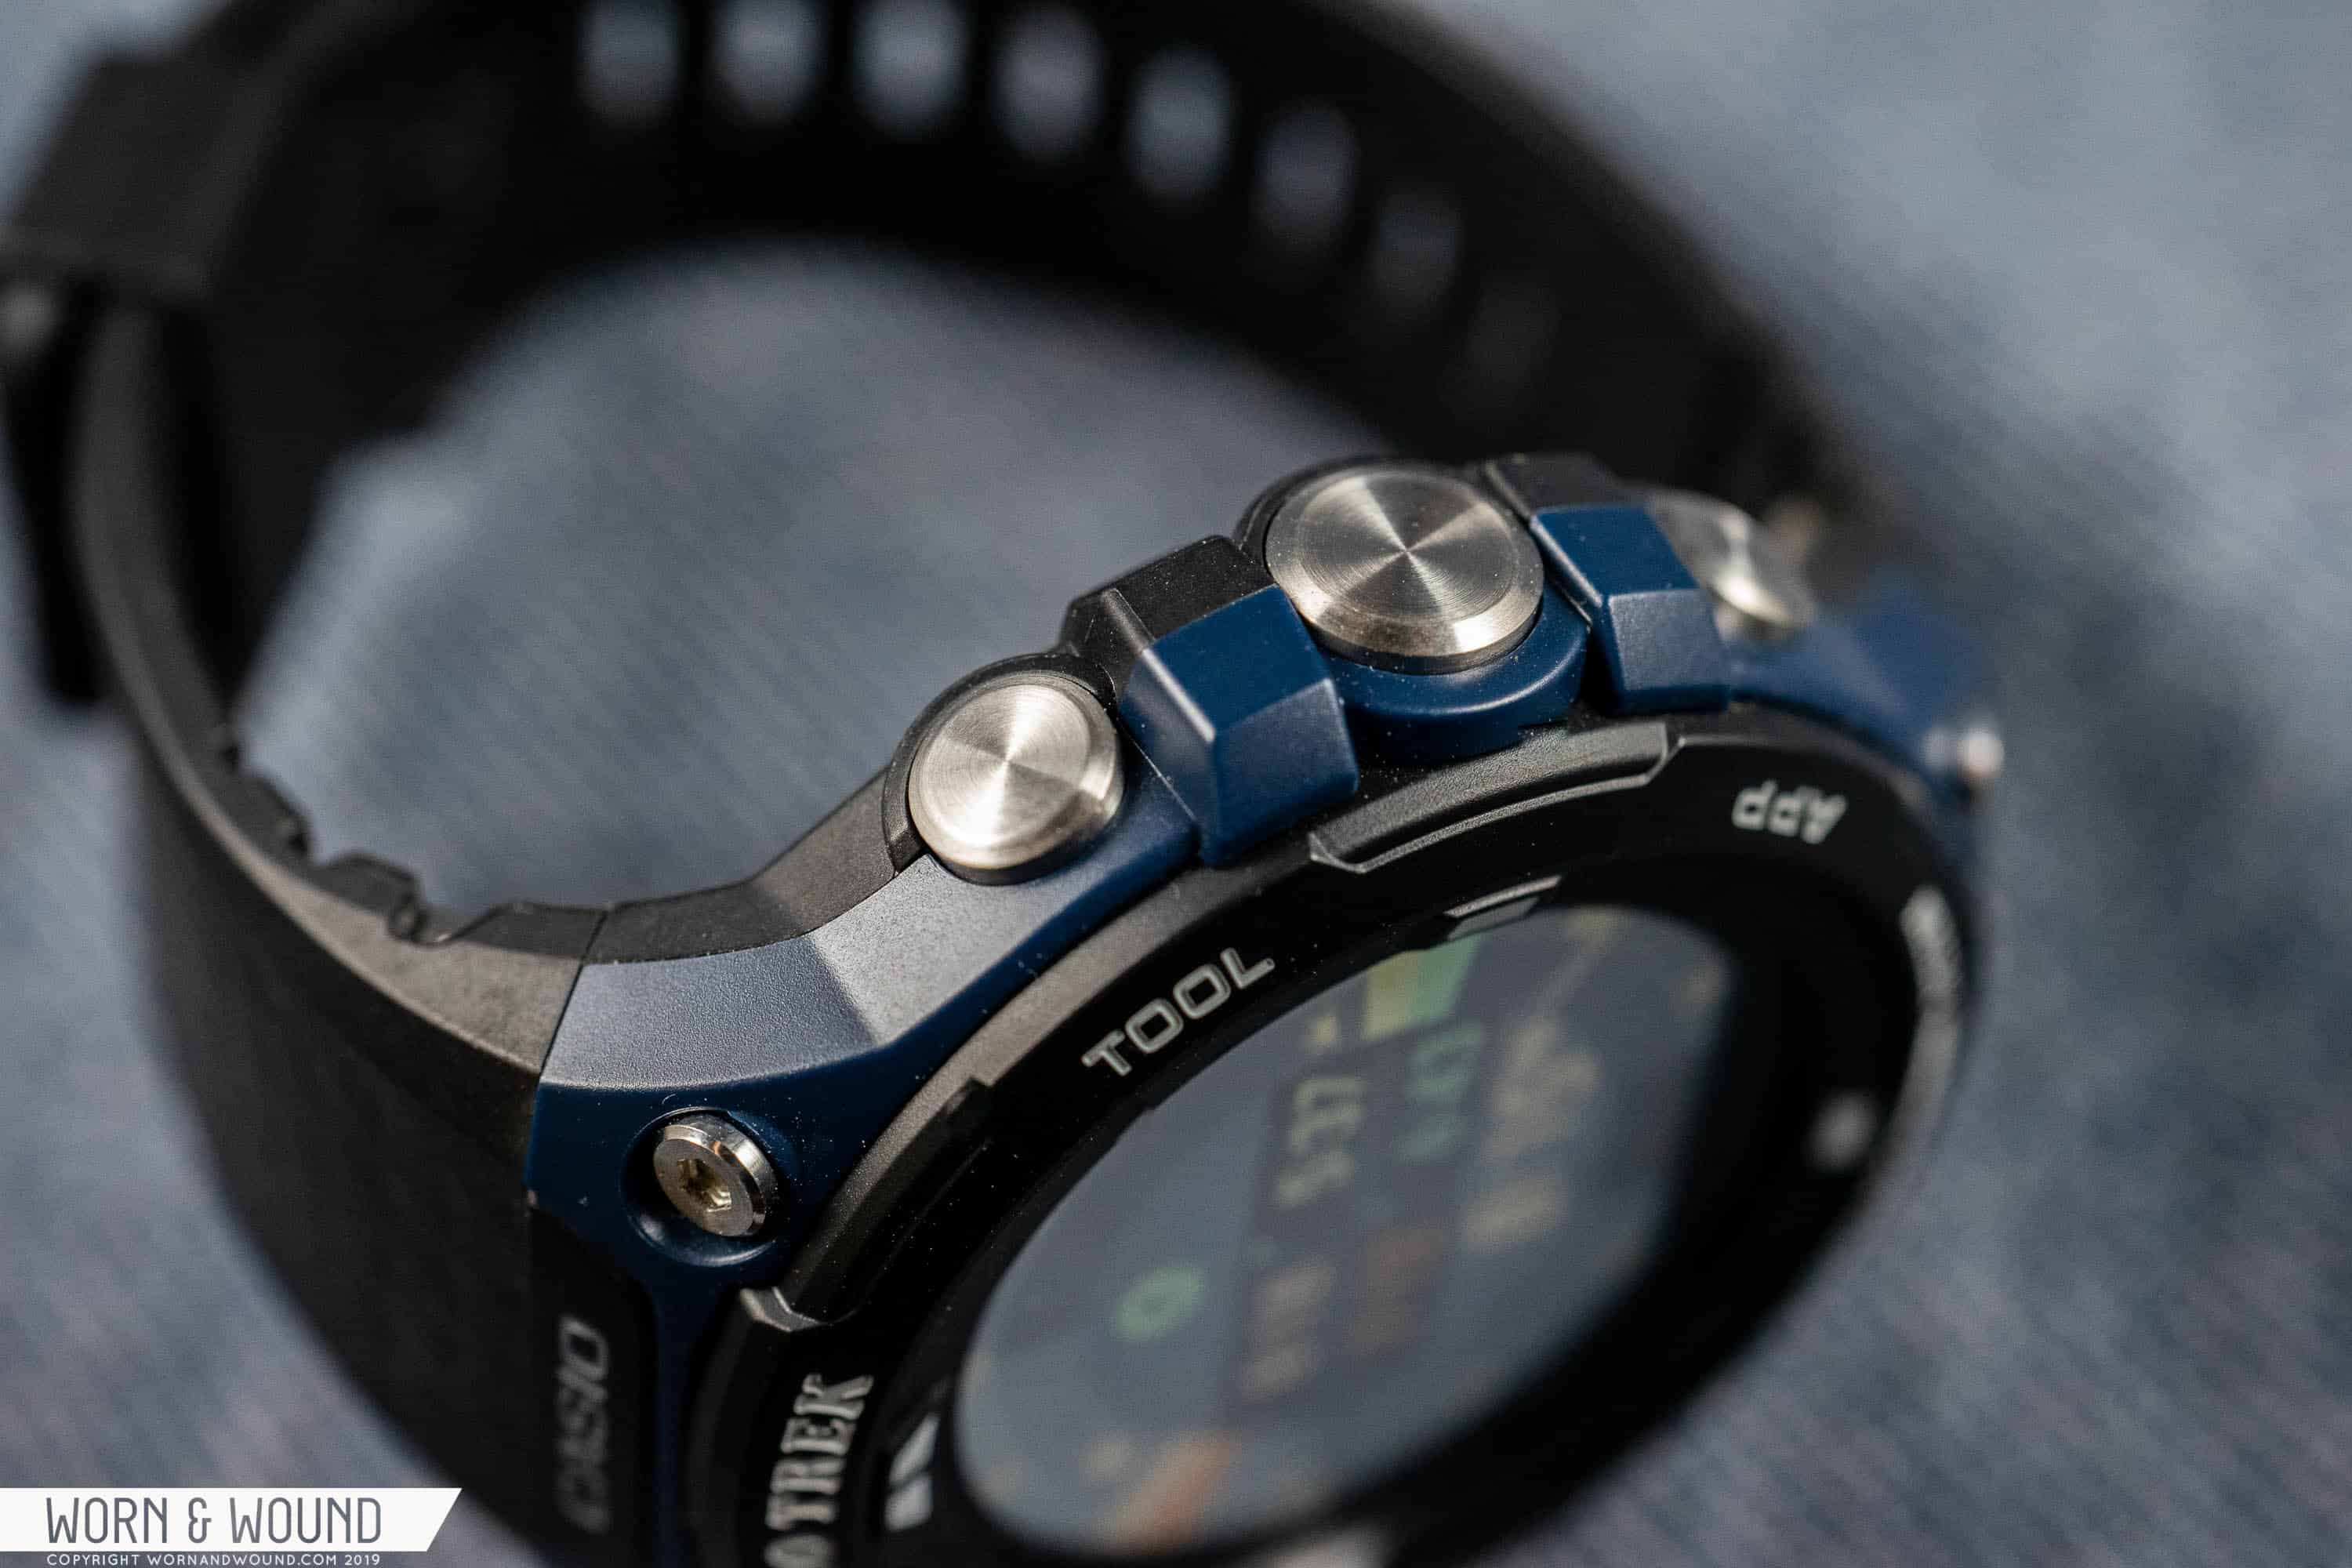 CASIO PRO TREK - PRO TREK watches feature barometer